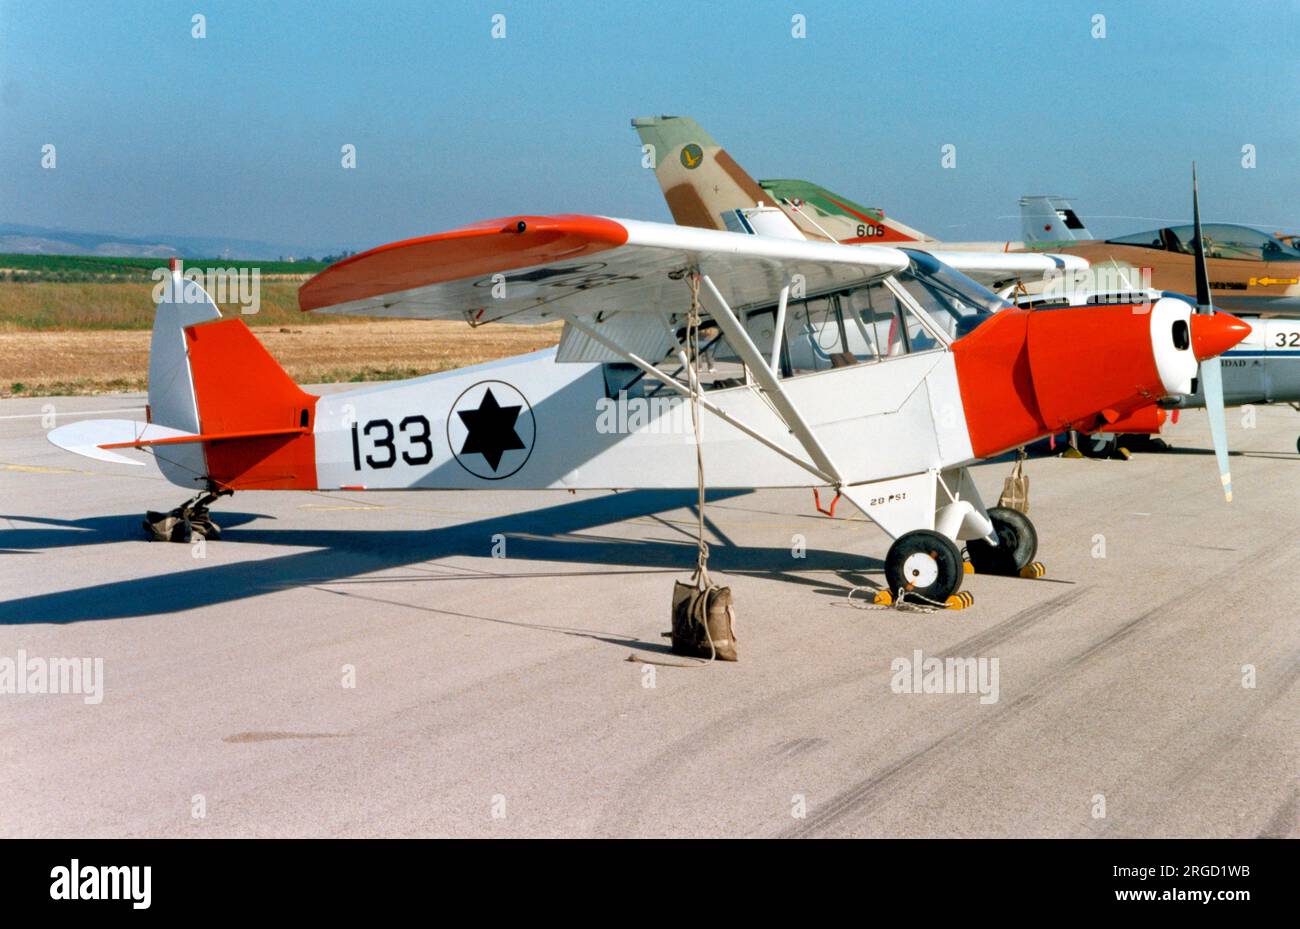 Israelische Luftwaffe – Piper PA-18-150 Super Cub 133 (msn 18-8109035) Stockfoto